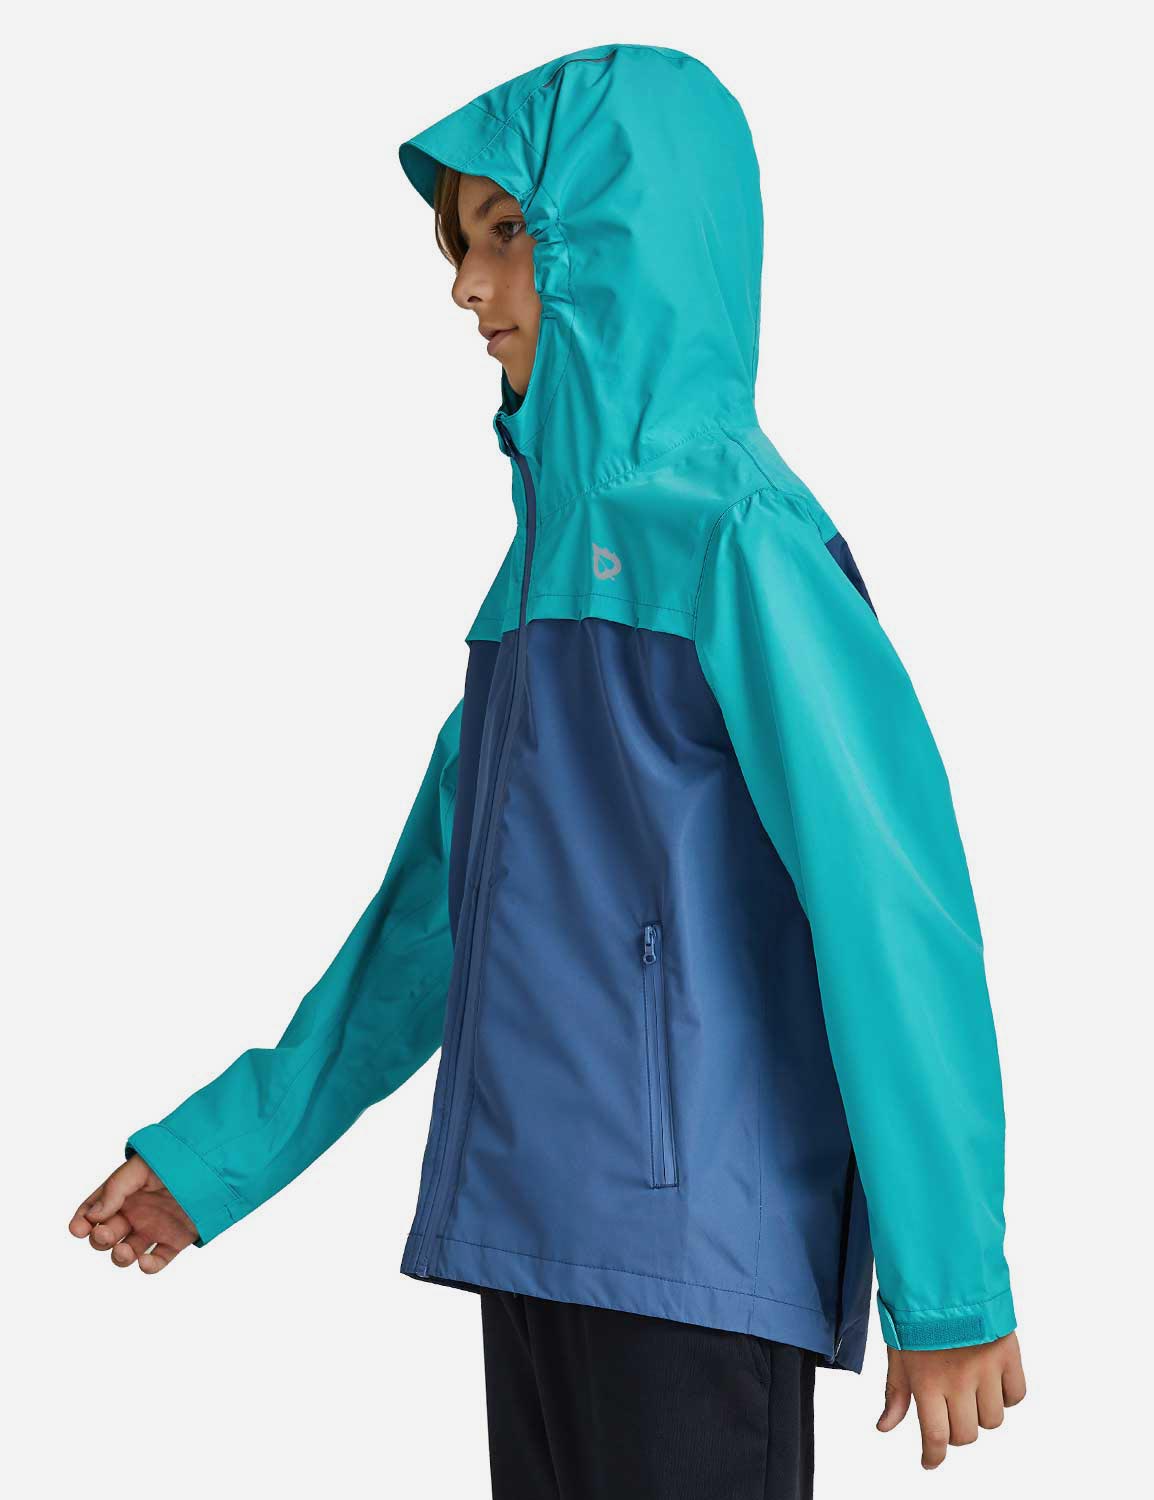 Baleaf Kid's Waterproof Outdoor Hooded Cycling Rain Jacket cai037 Navy/Green Side